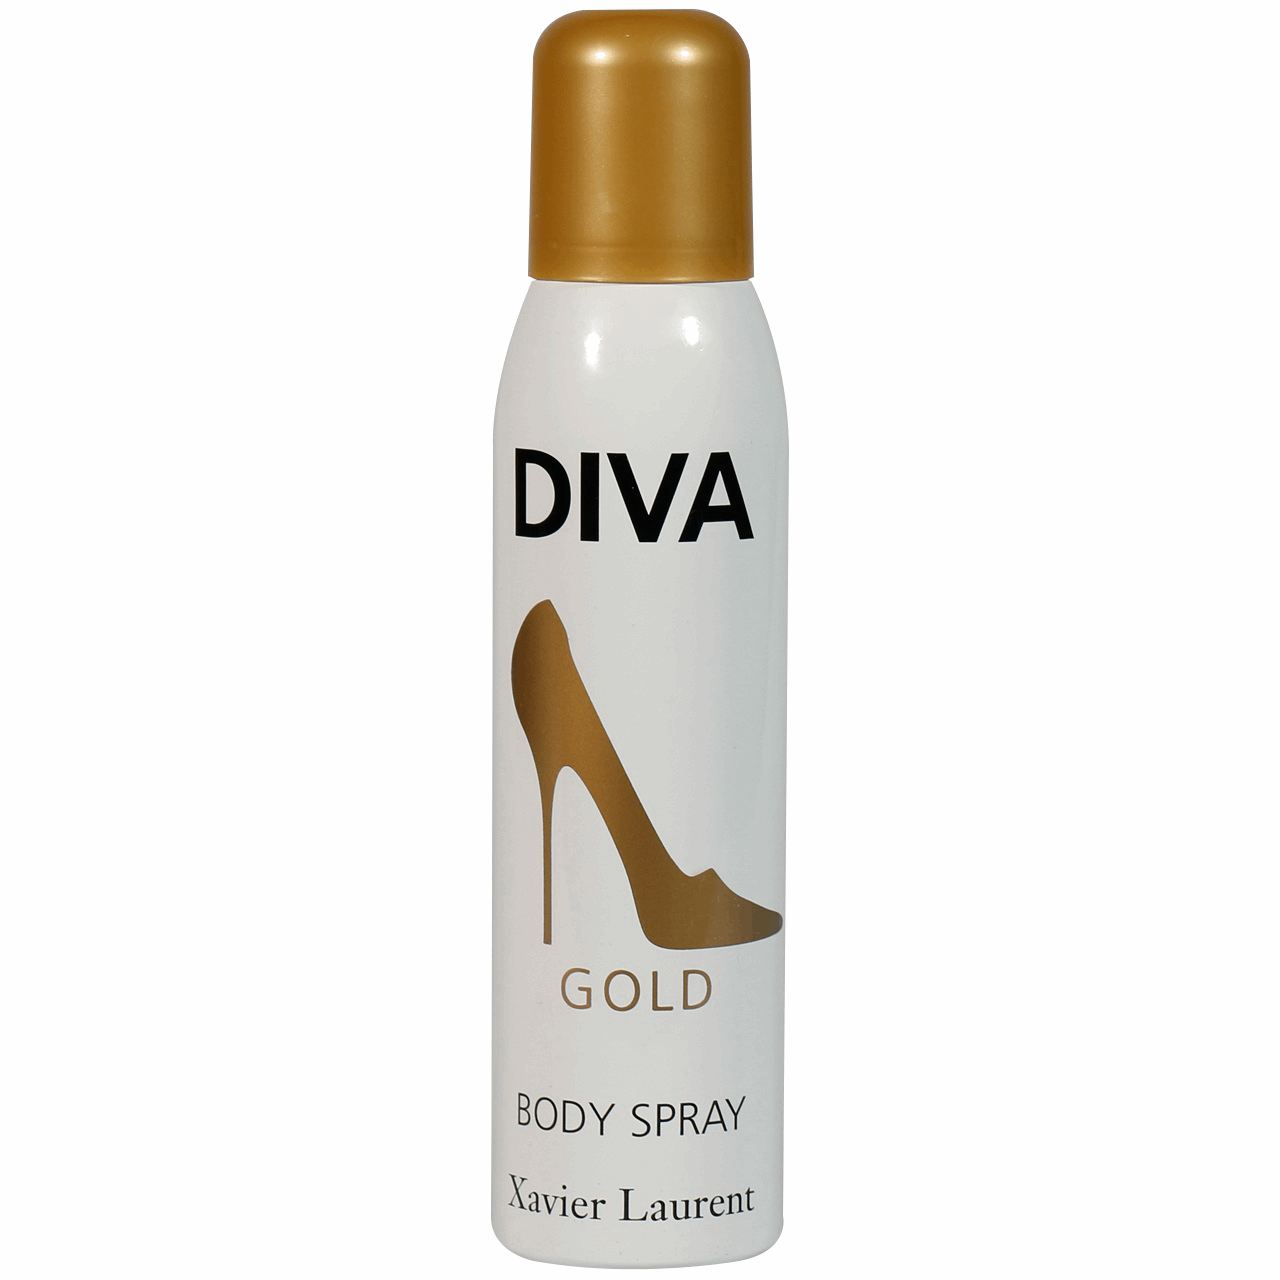 اسپری ضد تعریق زنانه زاویر لوران مدل Diva Gold حجم 150 میلی لیتر